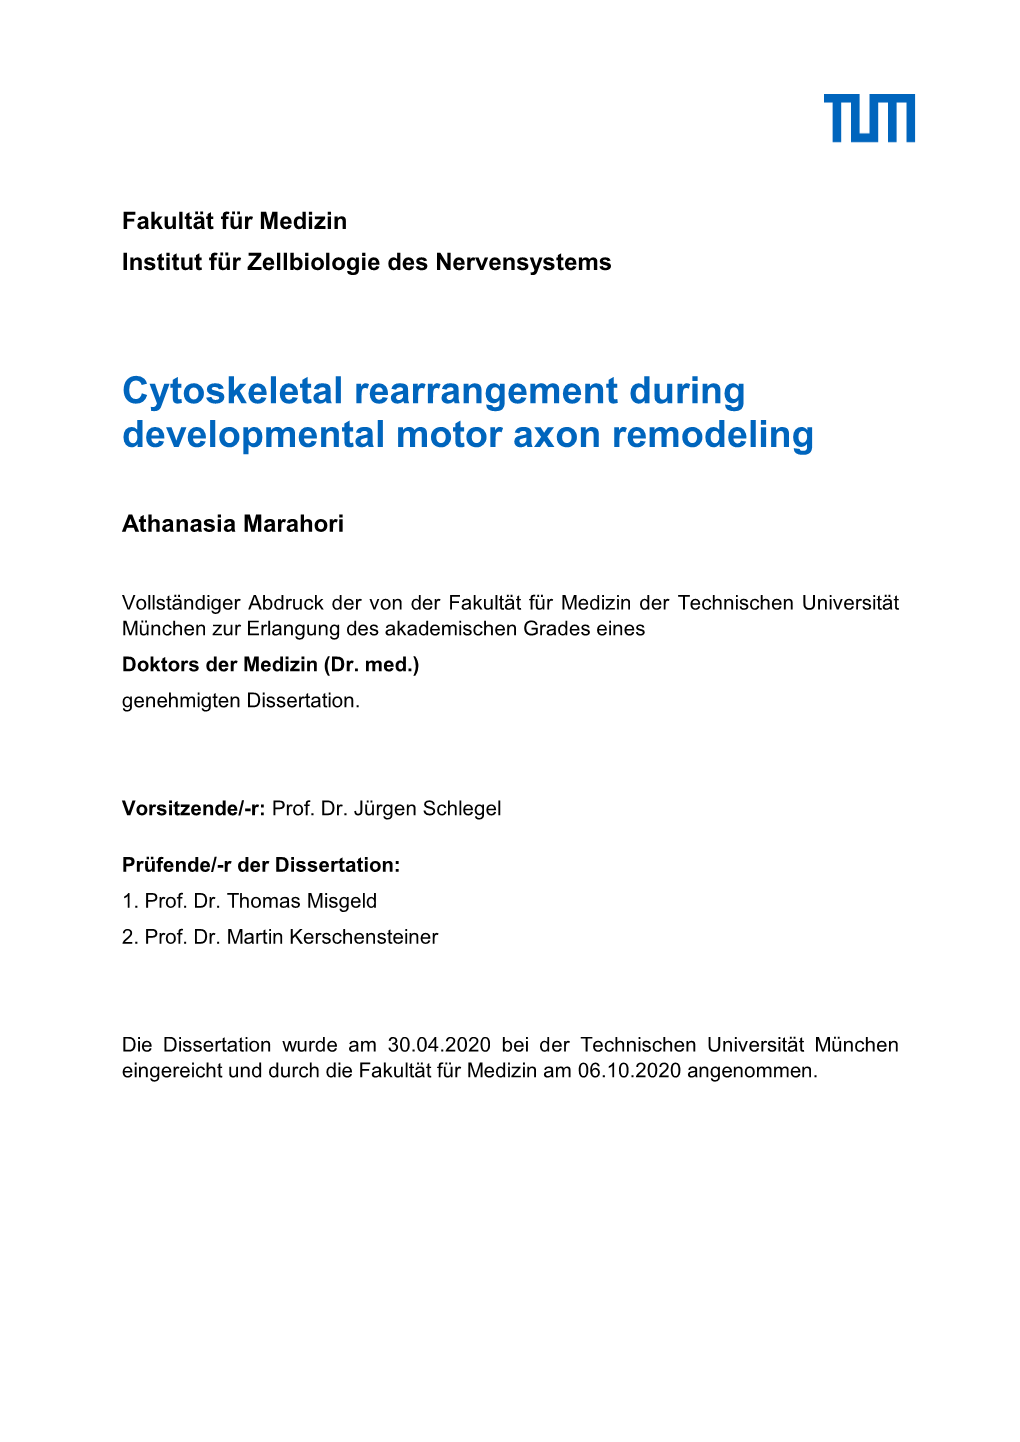 Cytoskeletal Rearrangement During Developmental Motor Axon Remodeling